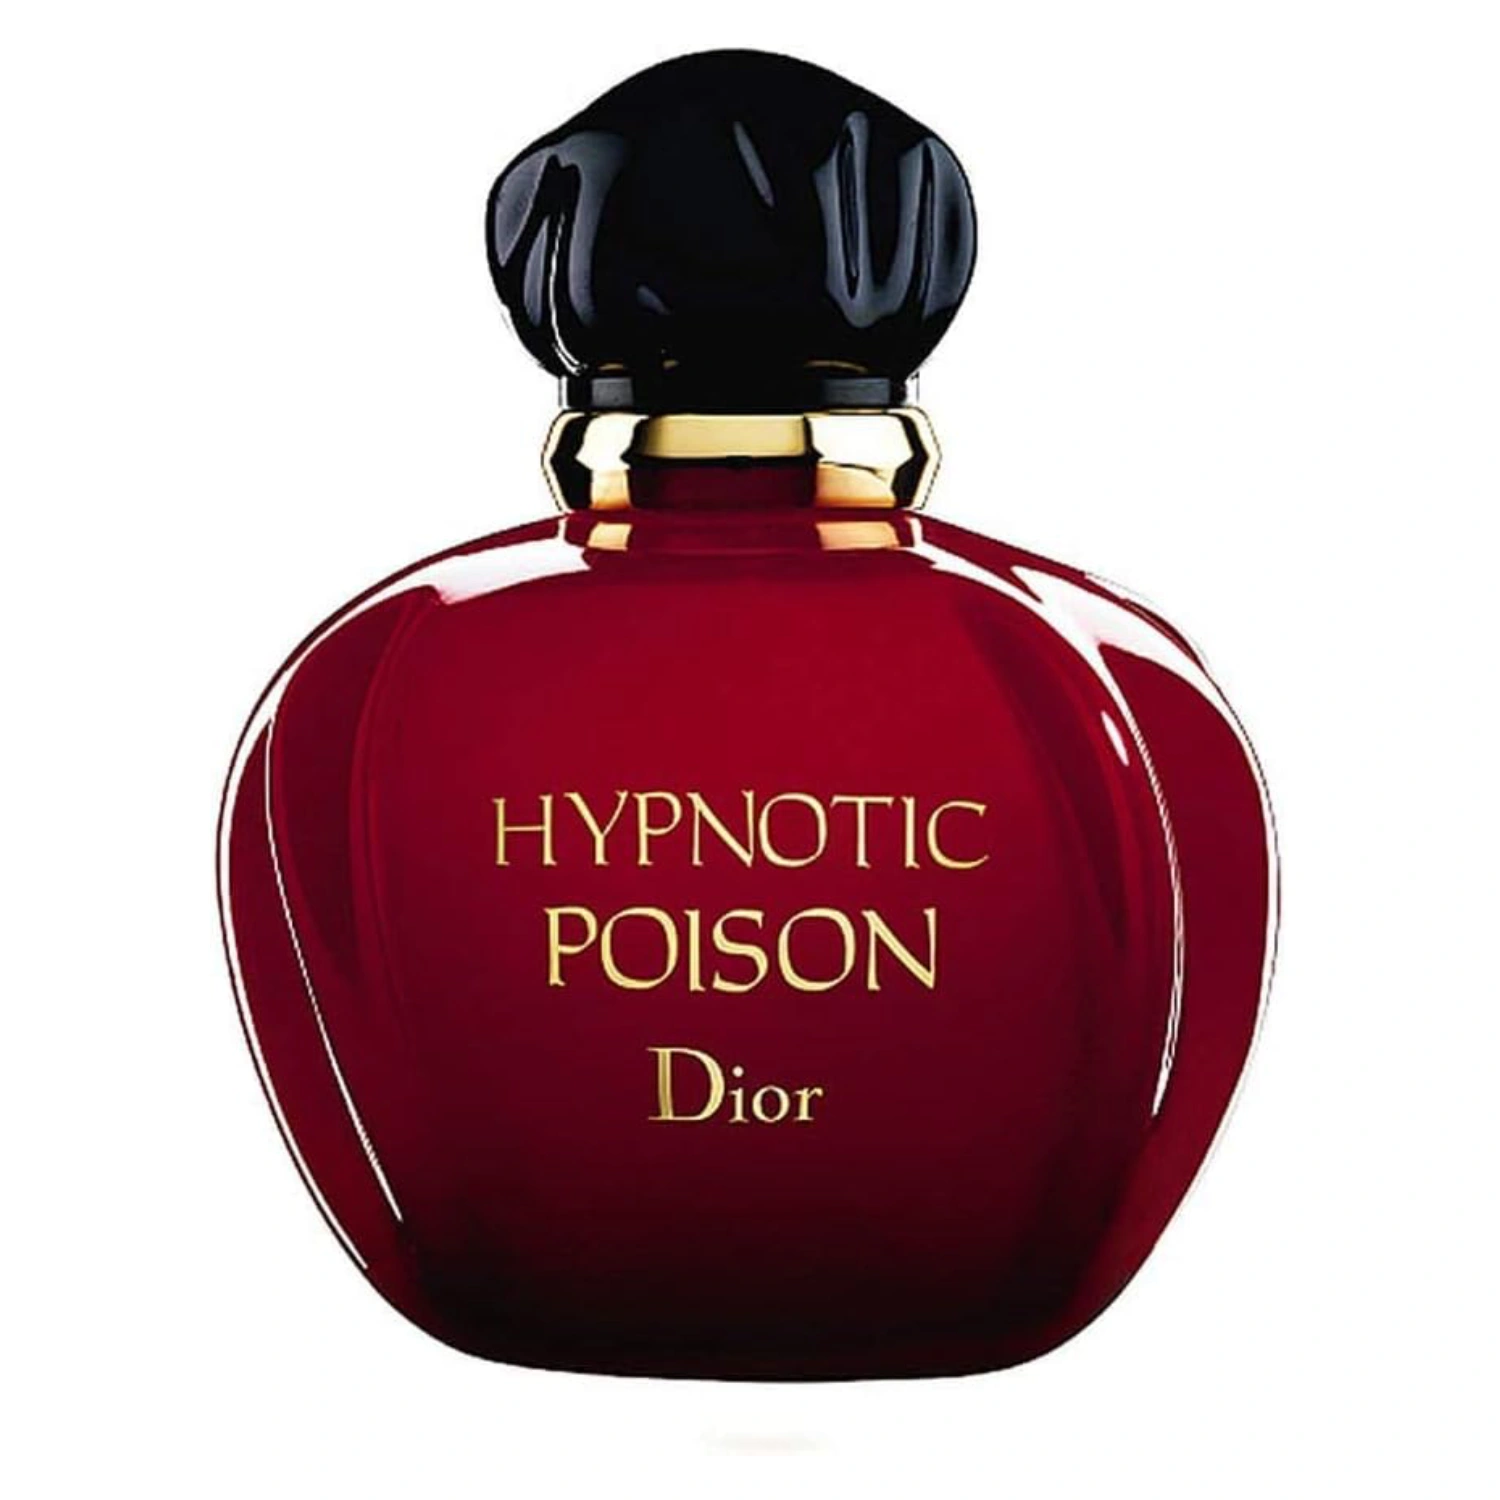 Elegant bottle of Christian Dior's Hypnotic Poison perfume